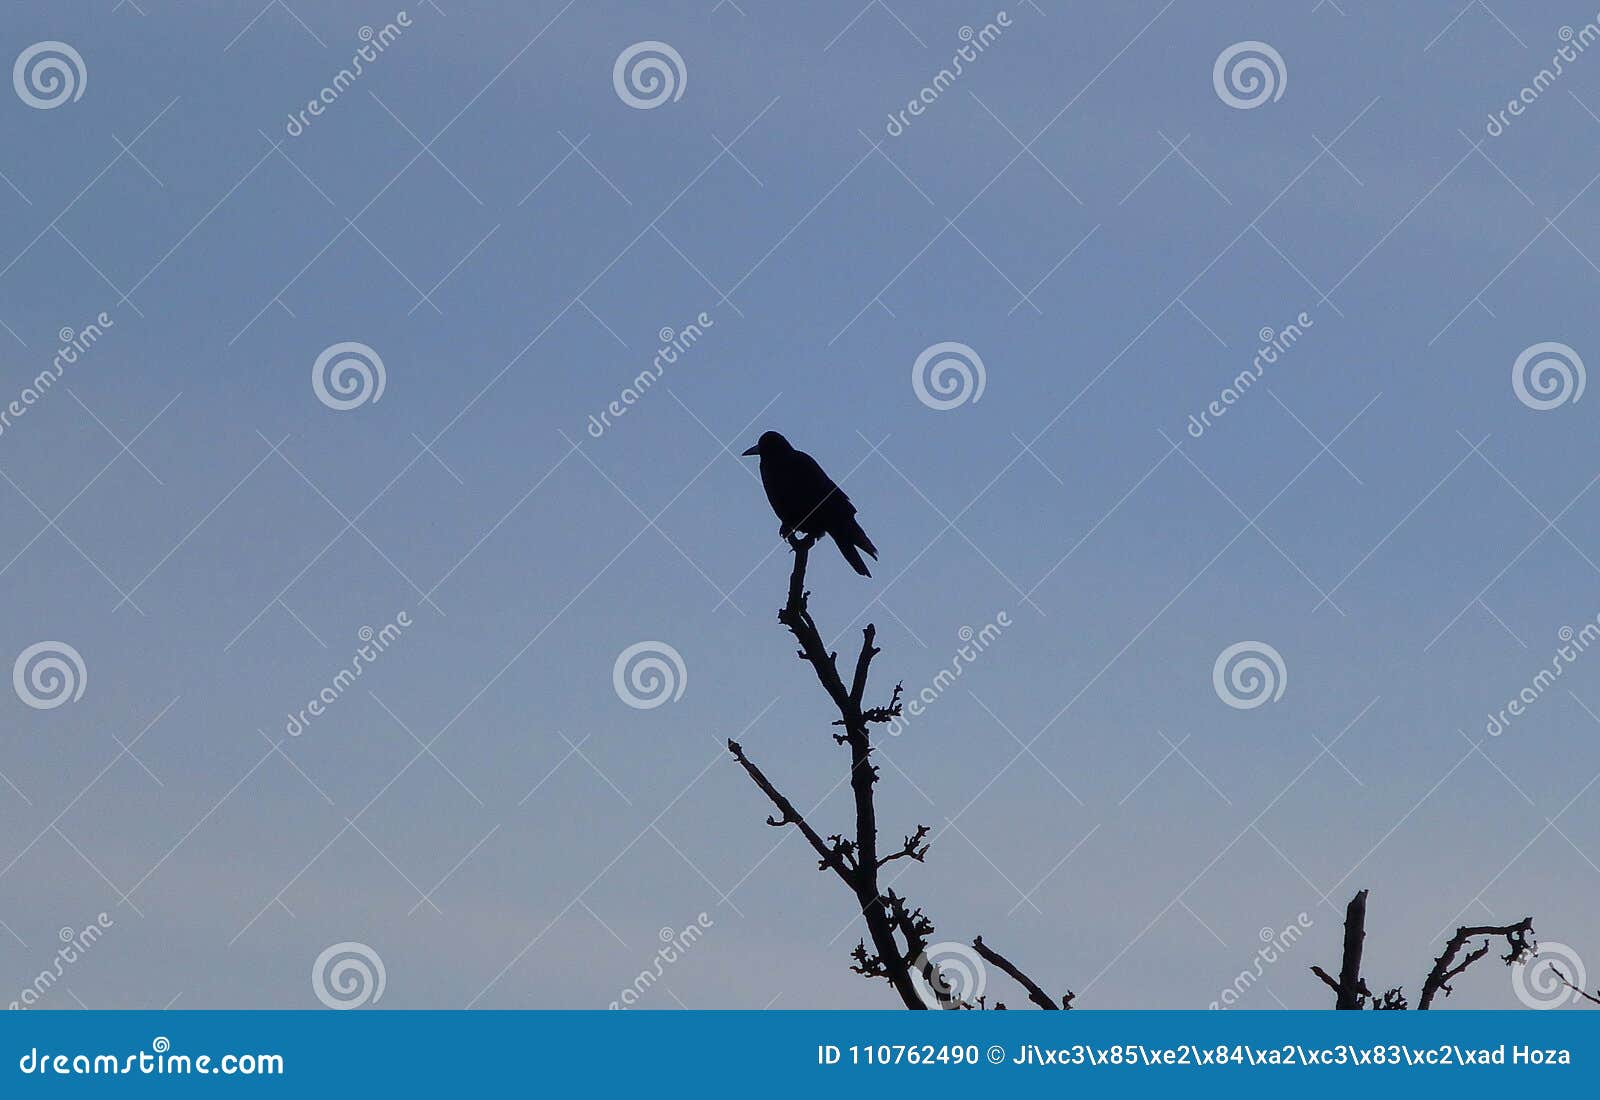 Large Black Bird Sitting On The Top Of The Tree Stock Photo - Image Of Animal, Bird: 110762490